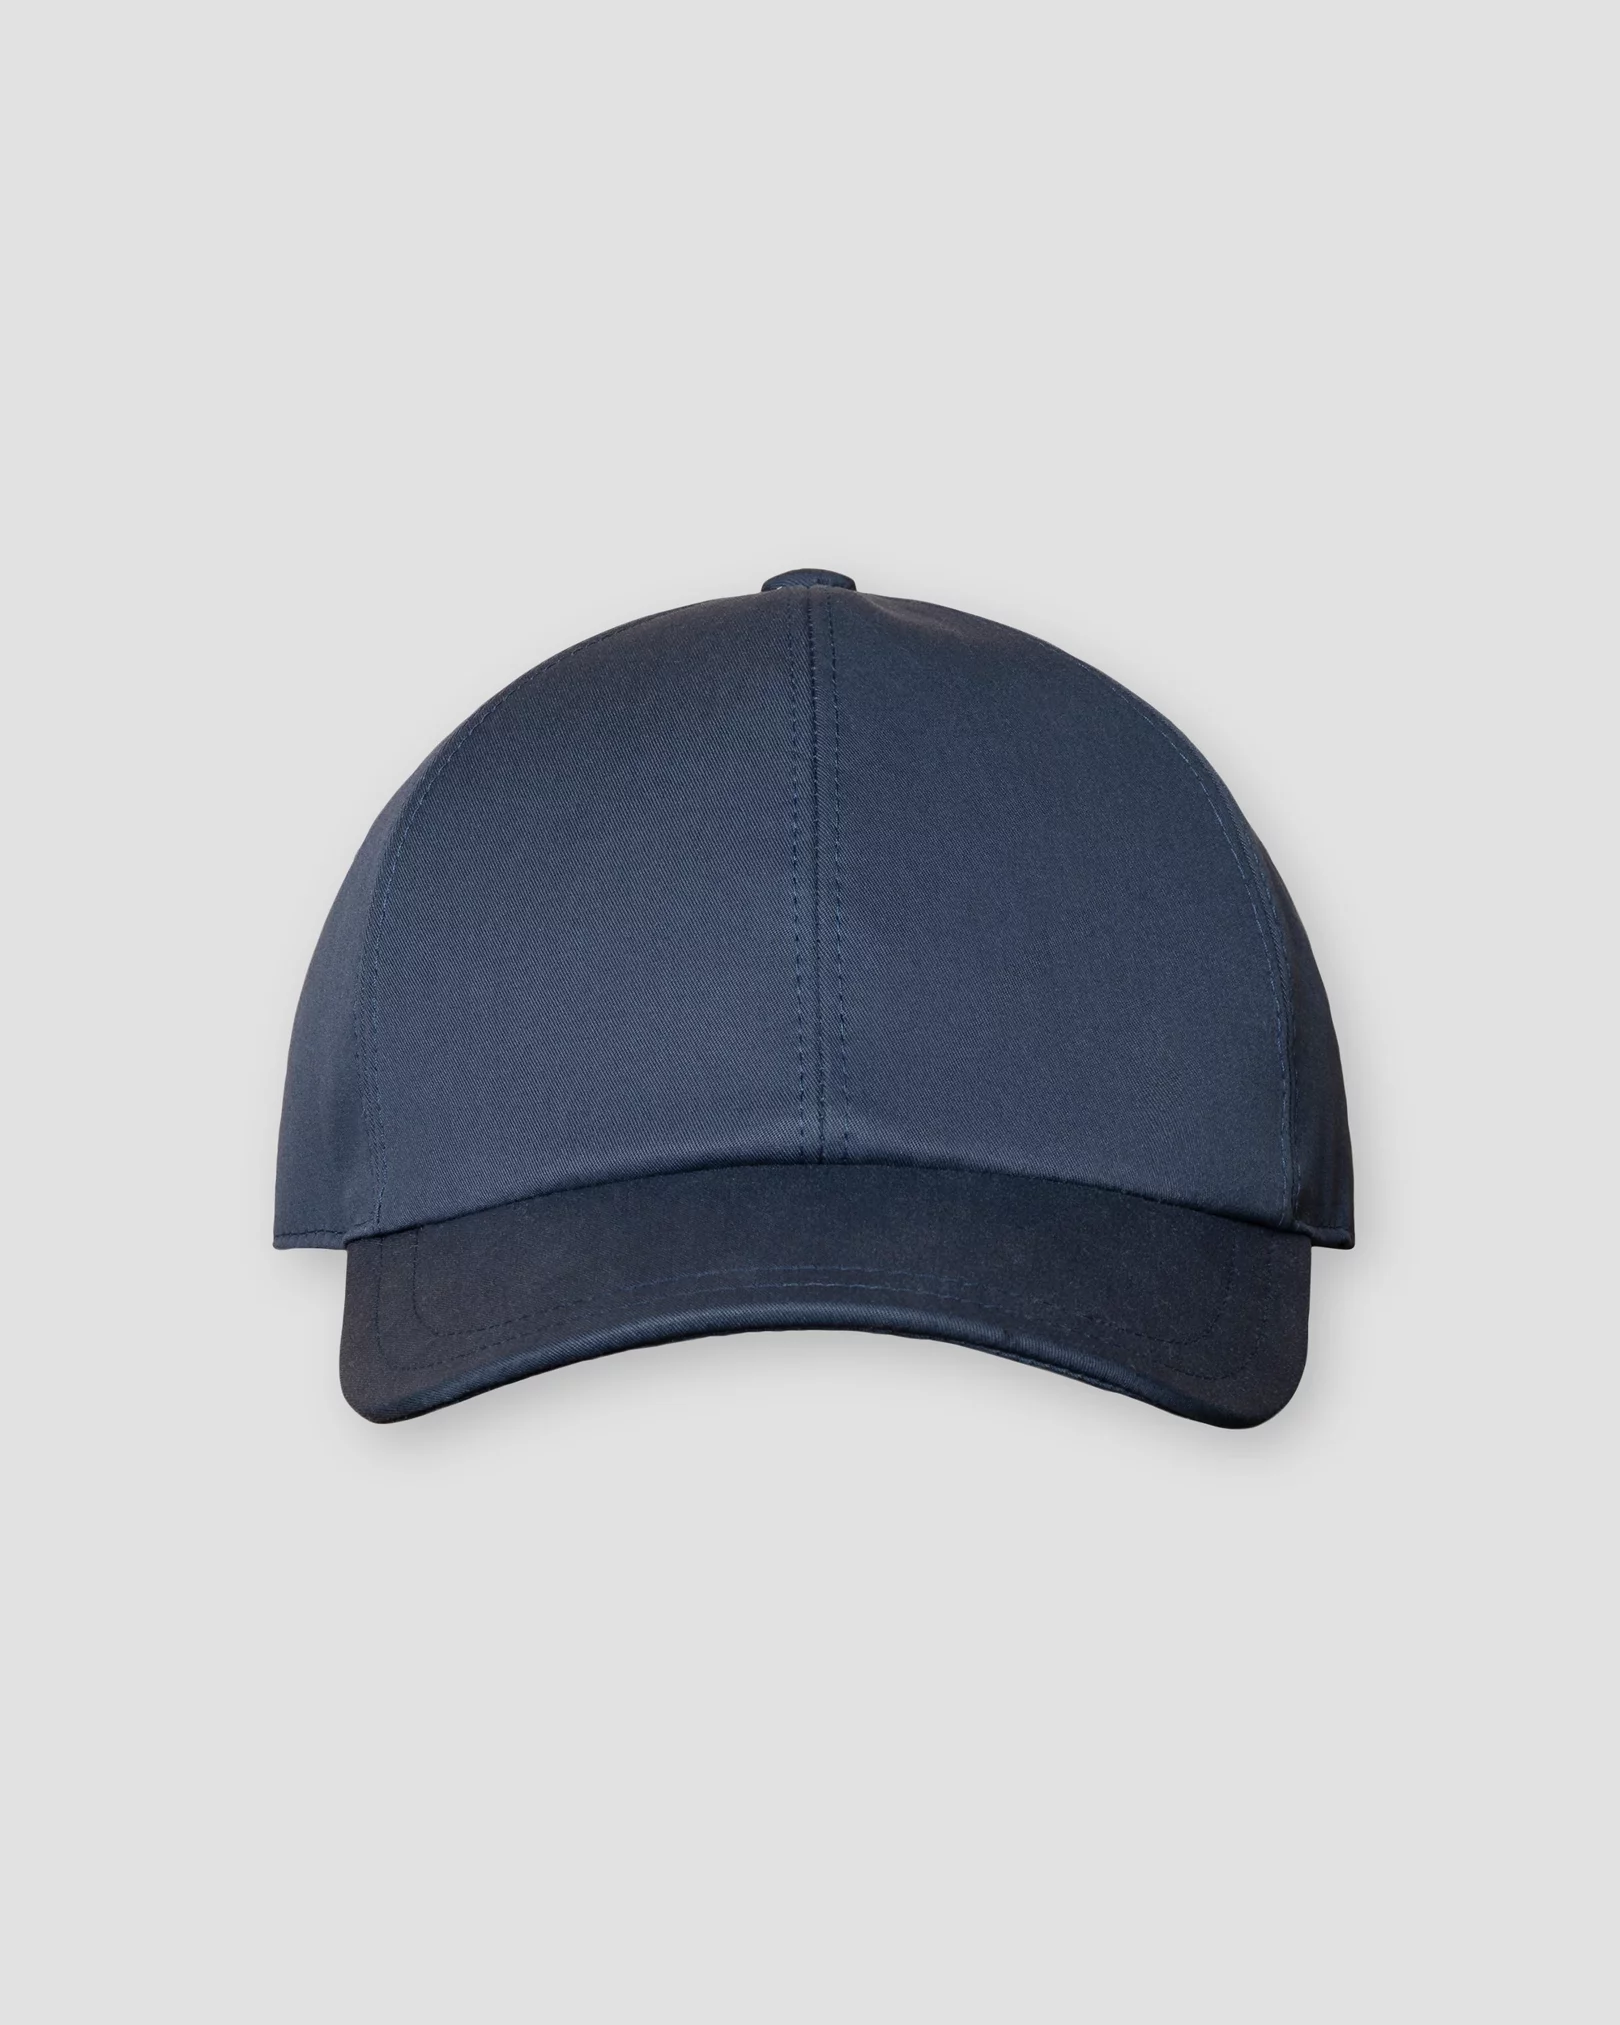 Eton - navy blue twill cap